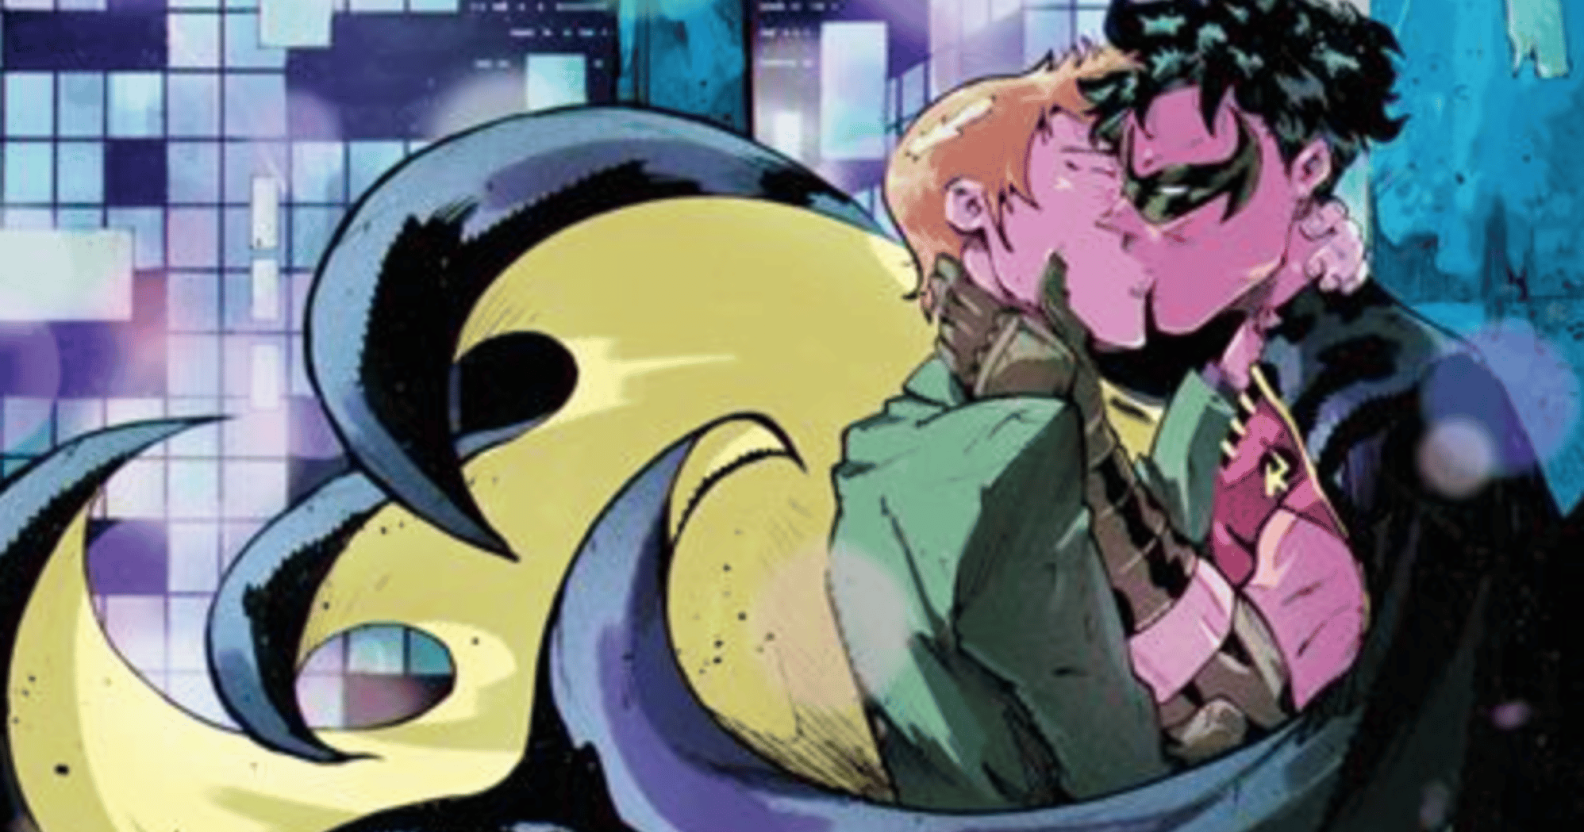 Cover art for DC Comics Tim Drake: Robin #6 shows Tim Drake, Batman's sidekick Robin, kissing his boyfriend